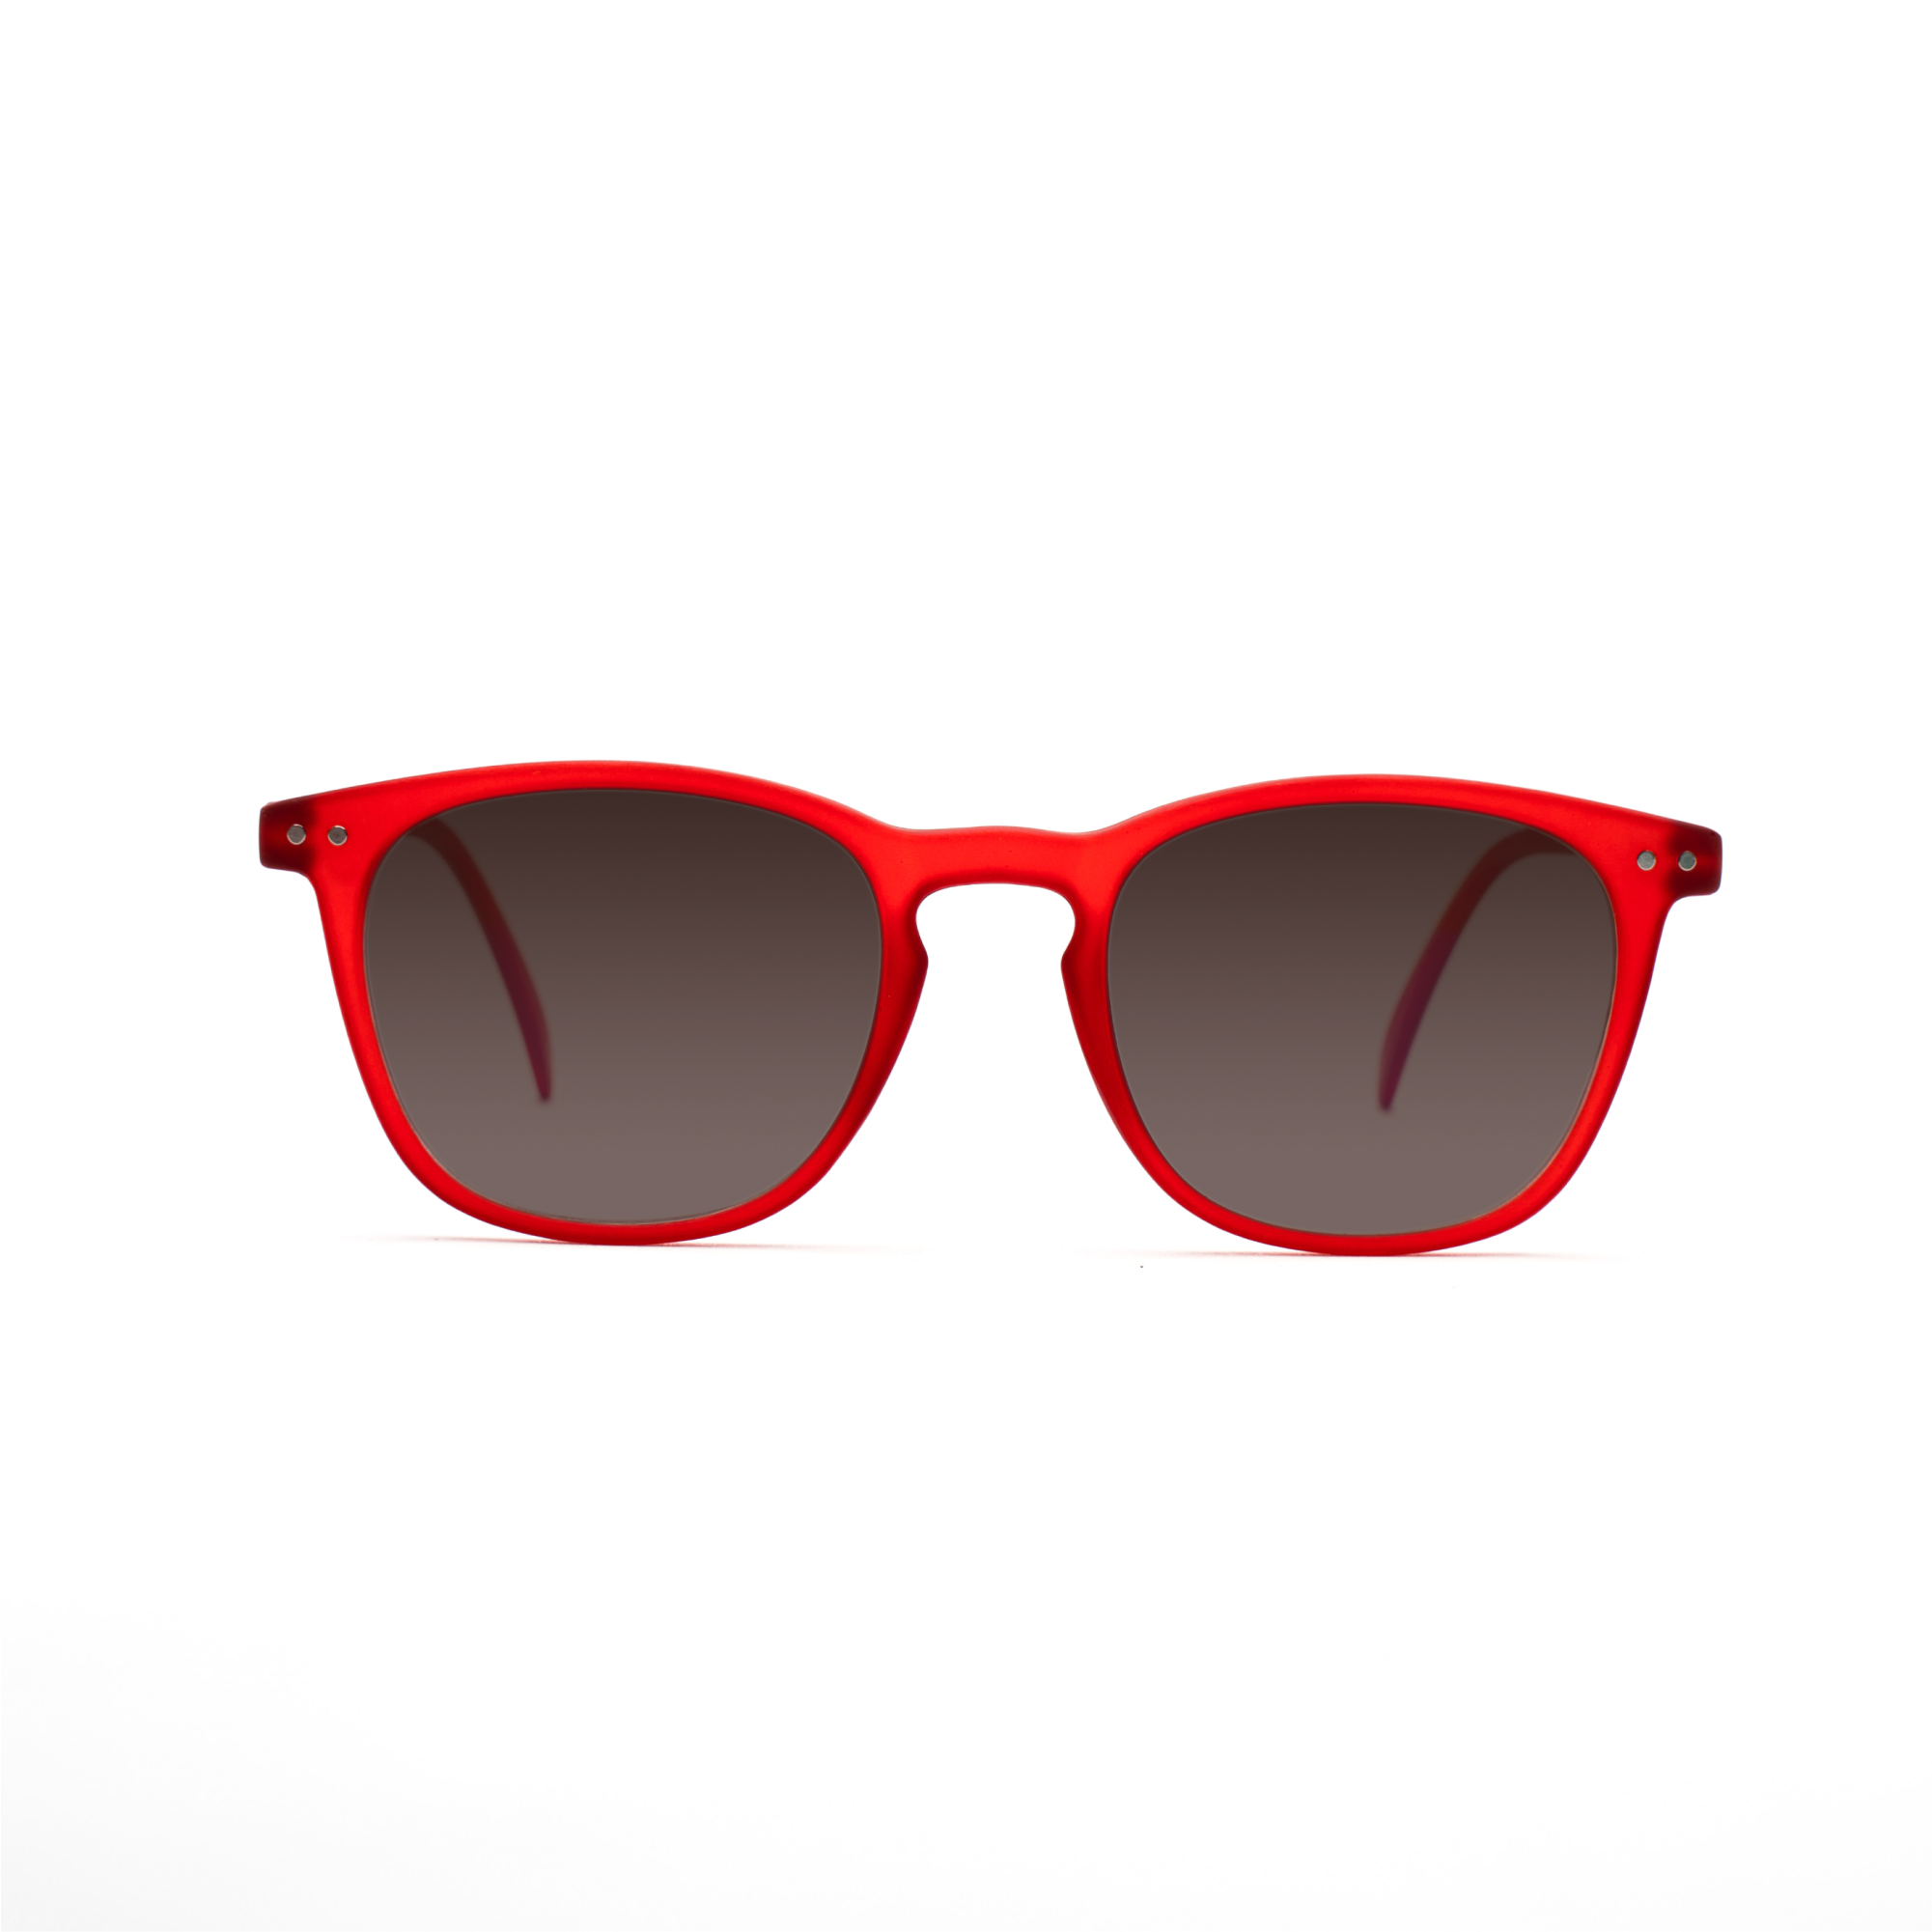 men's transition glasses – William Gen 8 m - Red